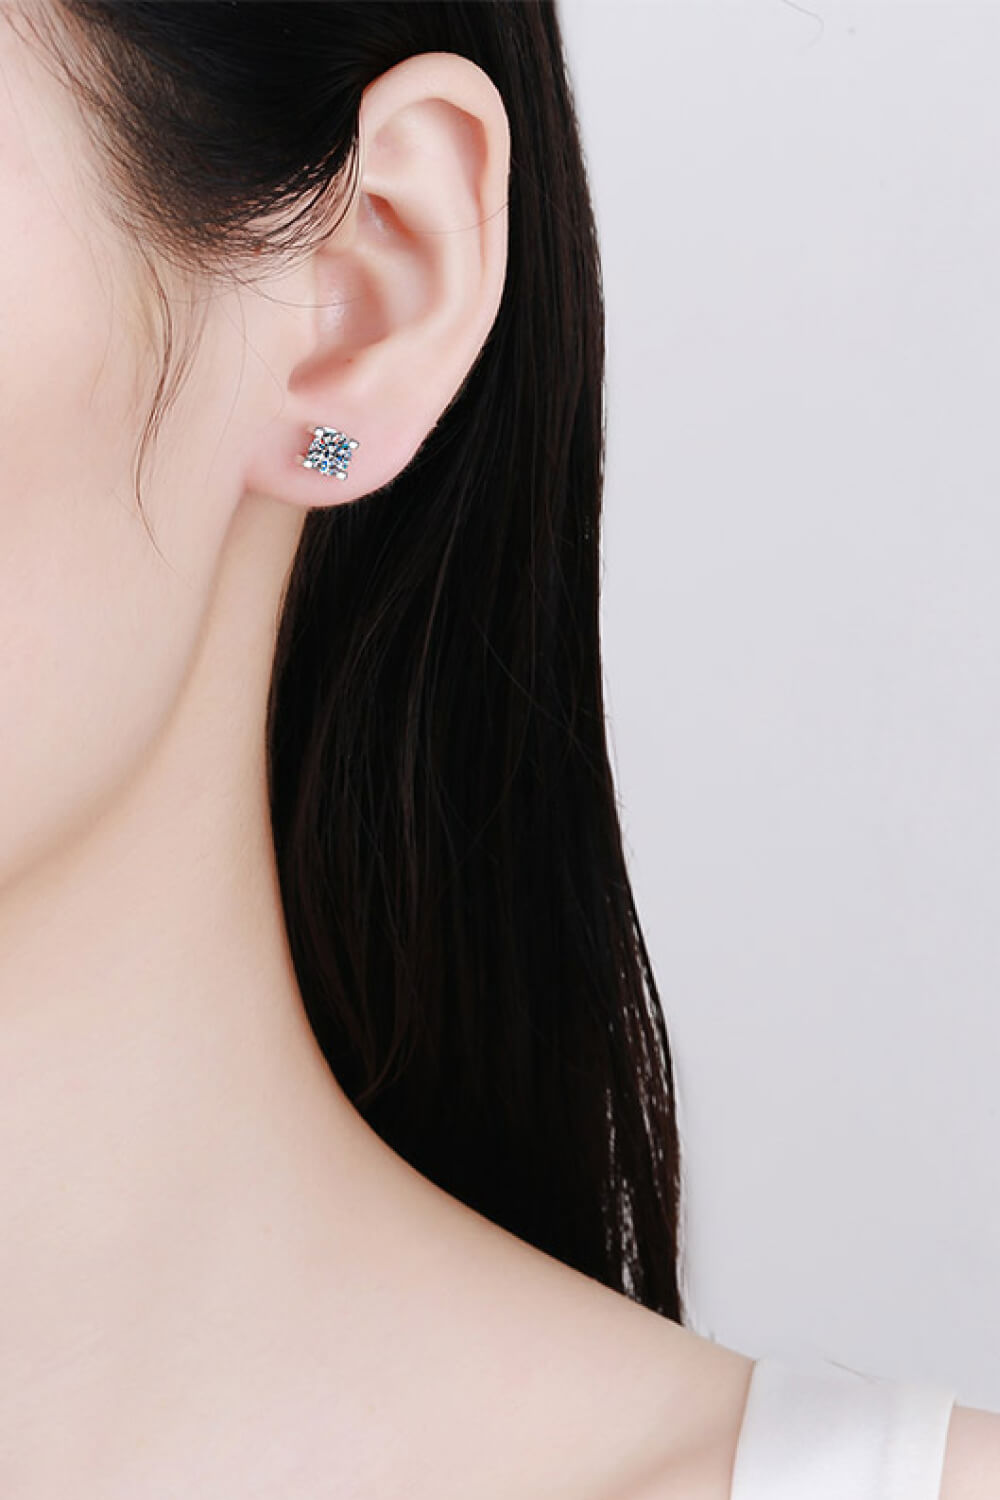 Women's Limitless Love 1 Carat Moissanite Stud Earrings